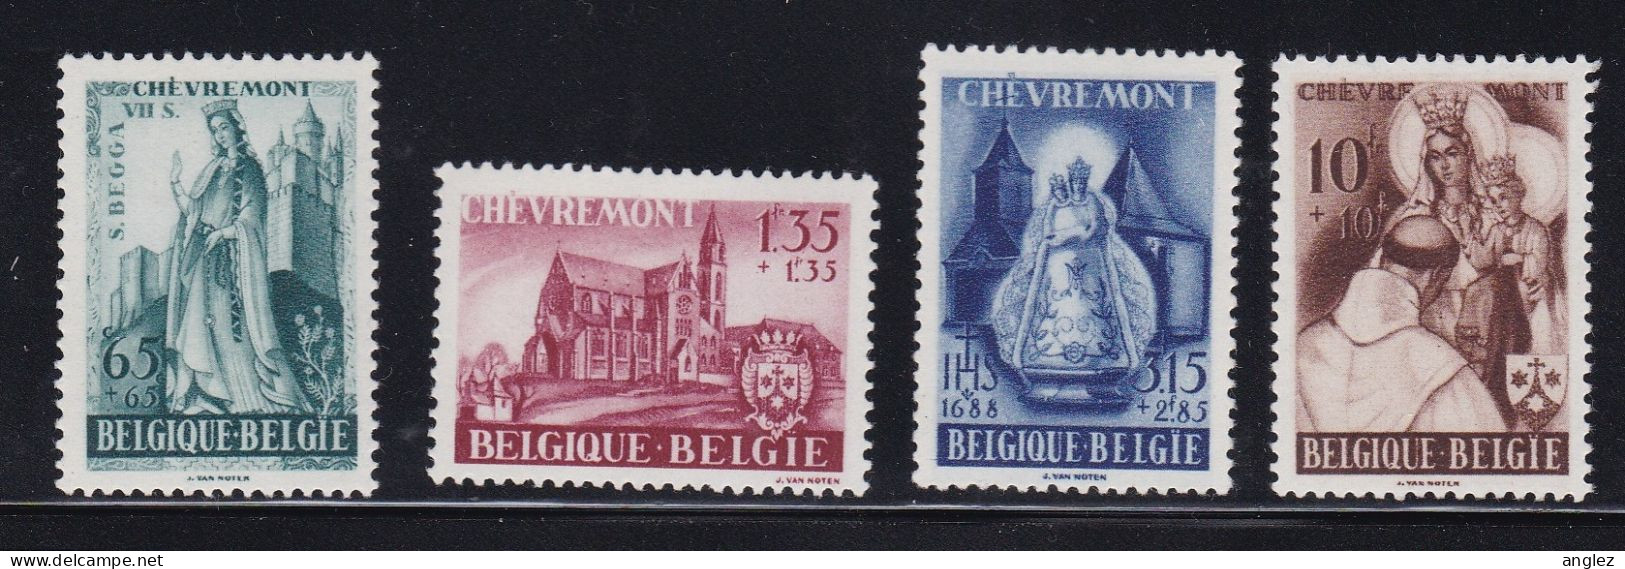 Belgium - 1948 Chevremont Set 4v MH - Ongebruikt